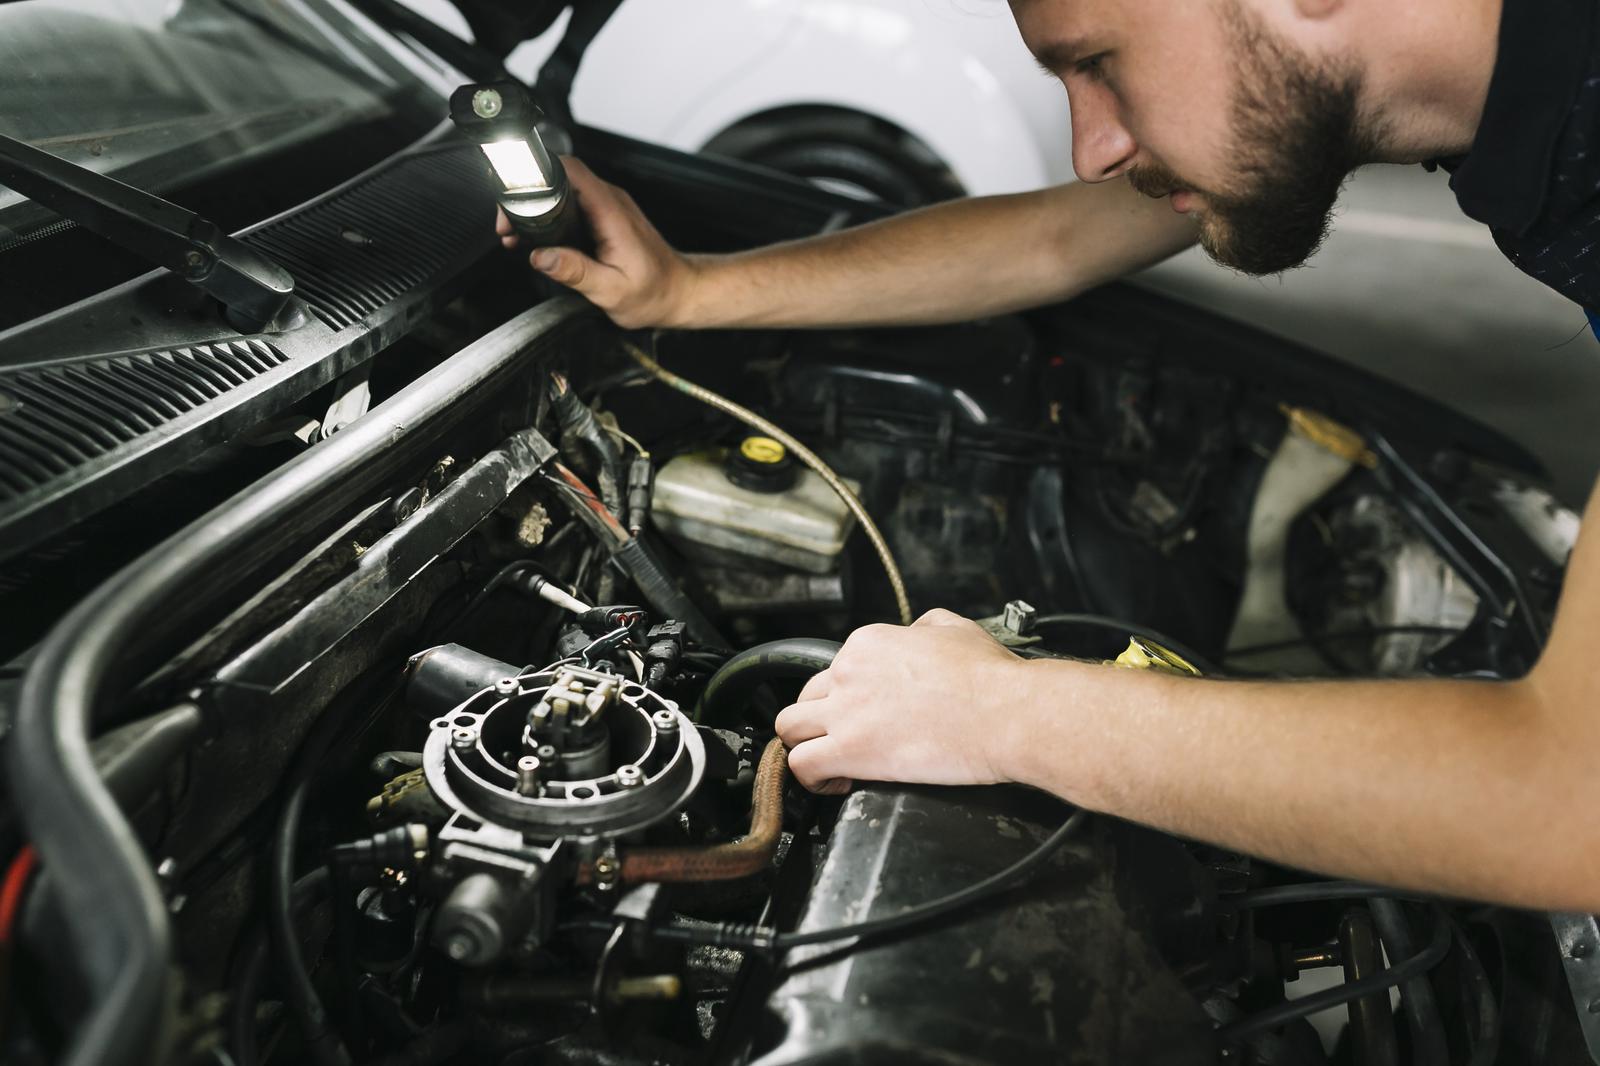 AABY OÜ - Maintenance and repair of motor vehicles in Estonia